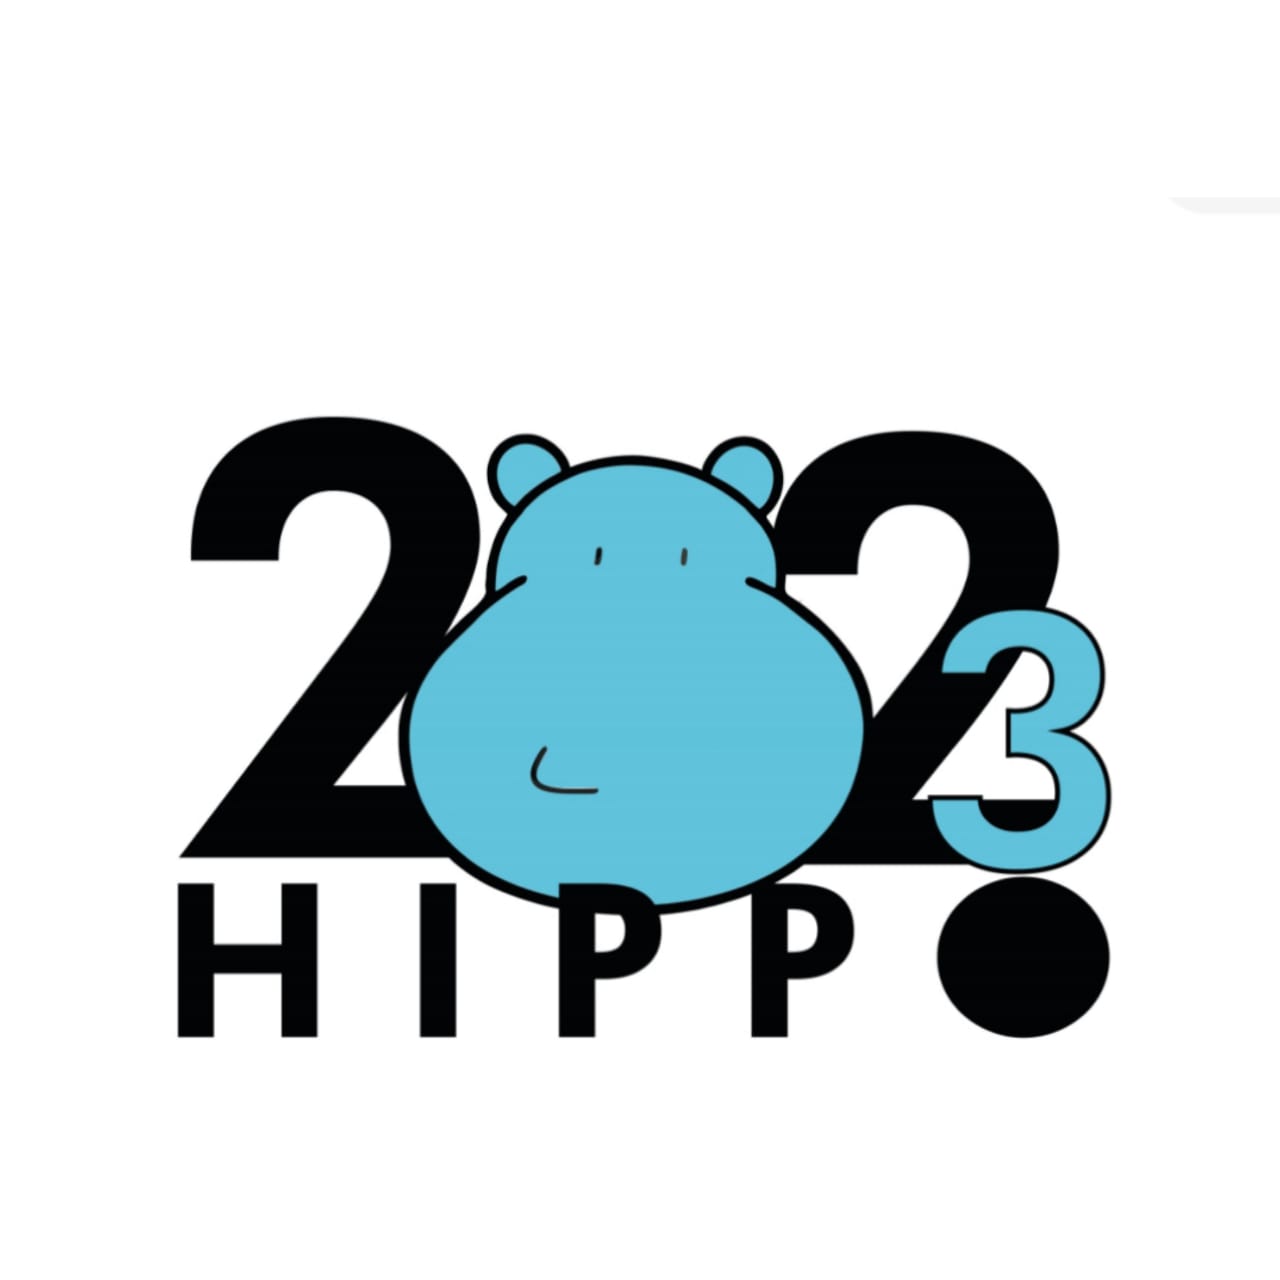 اعلام نتایج مرحله نخست هیپو ۲۰۲۳